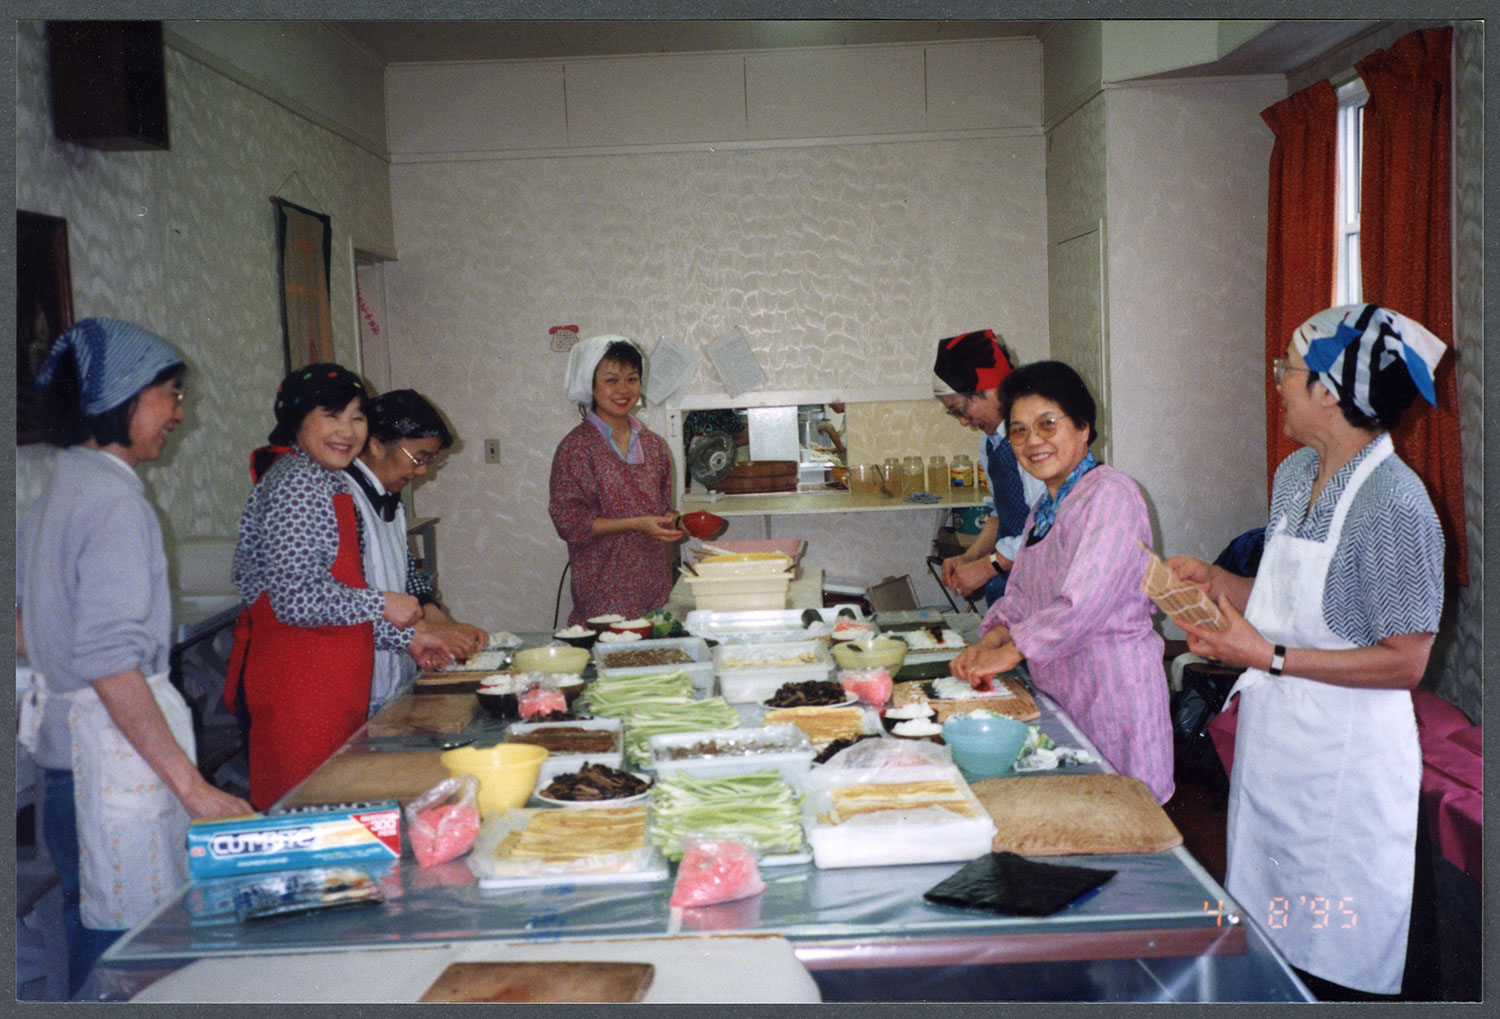 Spring bazaar at the church, 1995